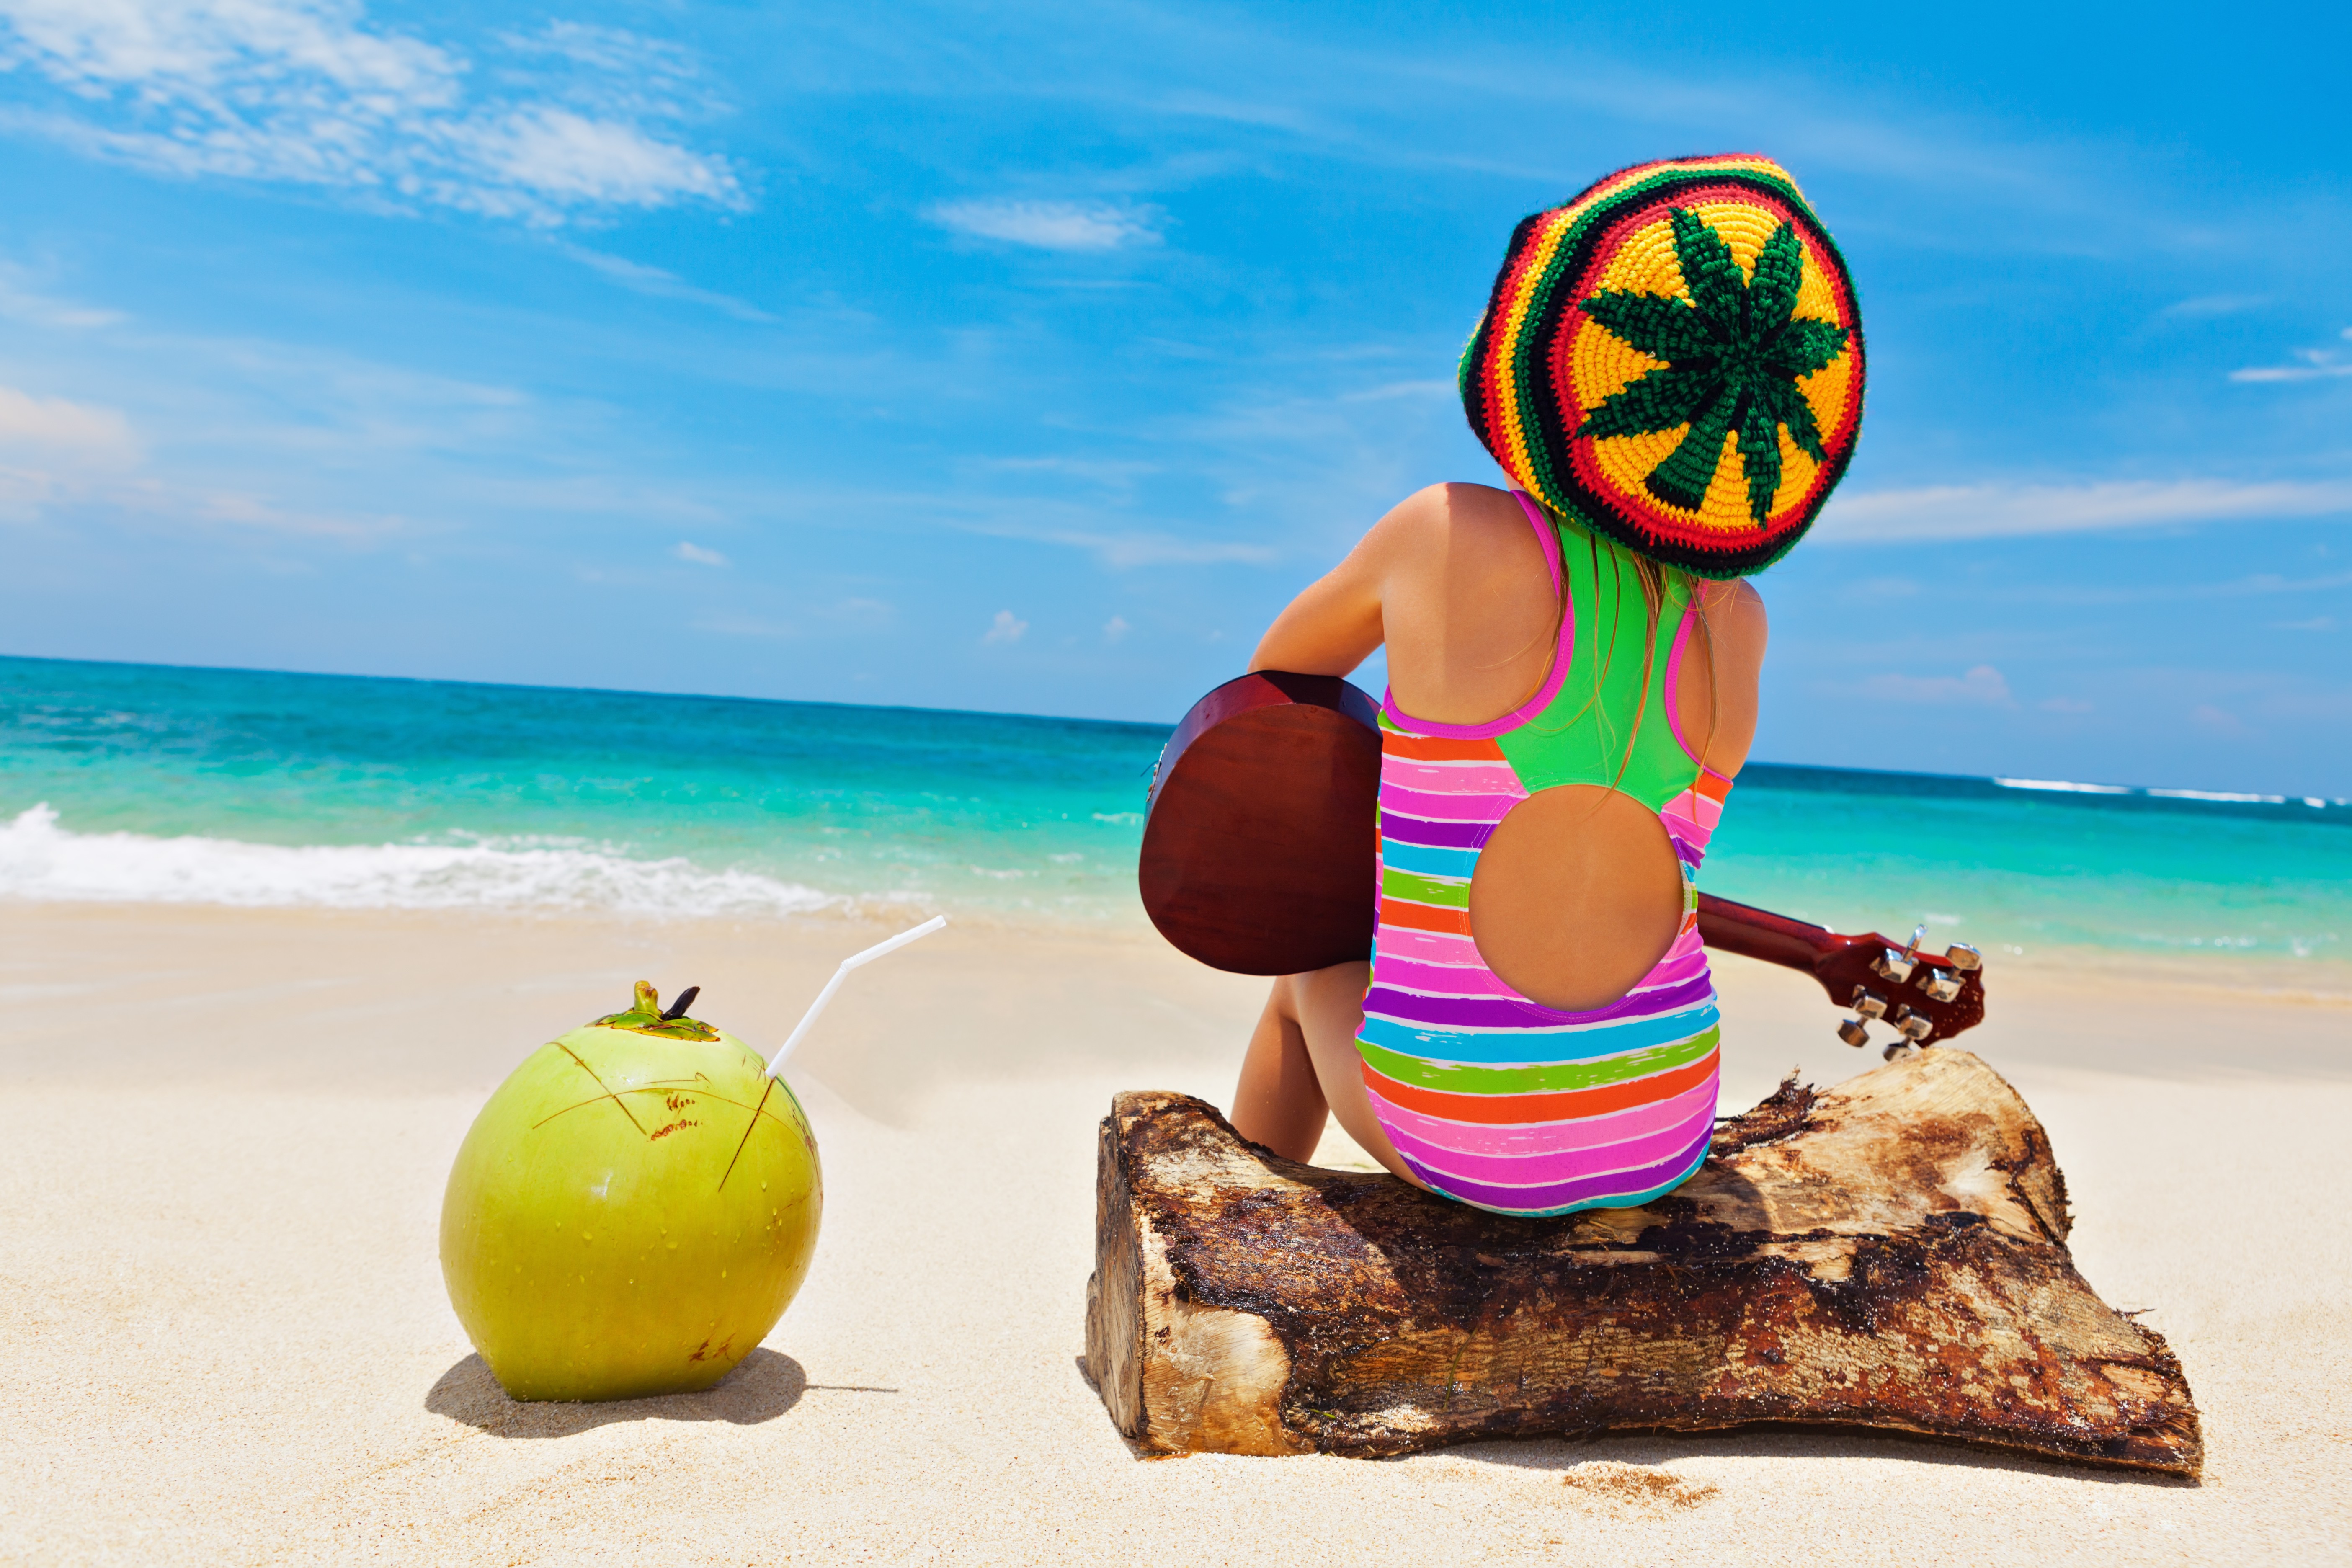 Child on beach with rasta hat Jamaica